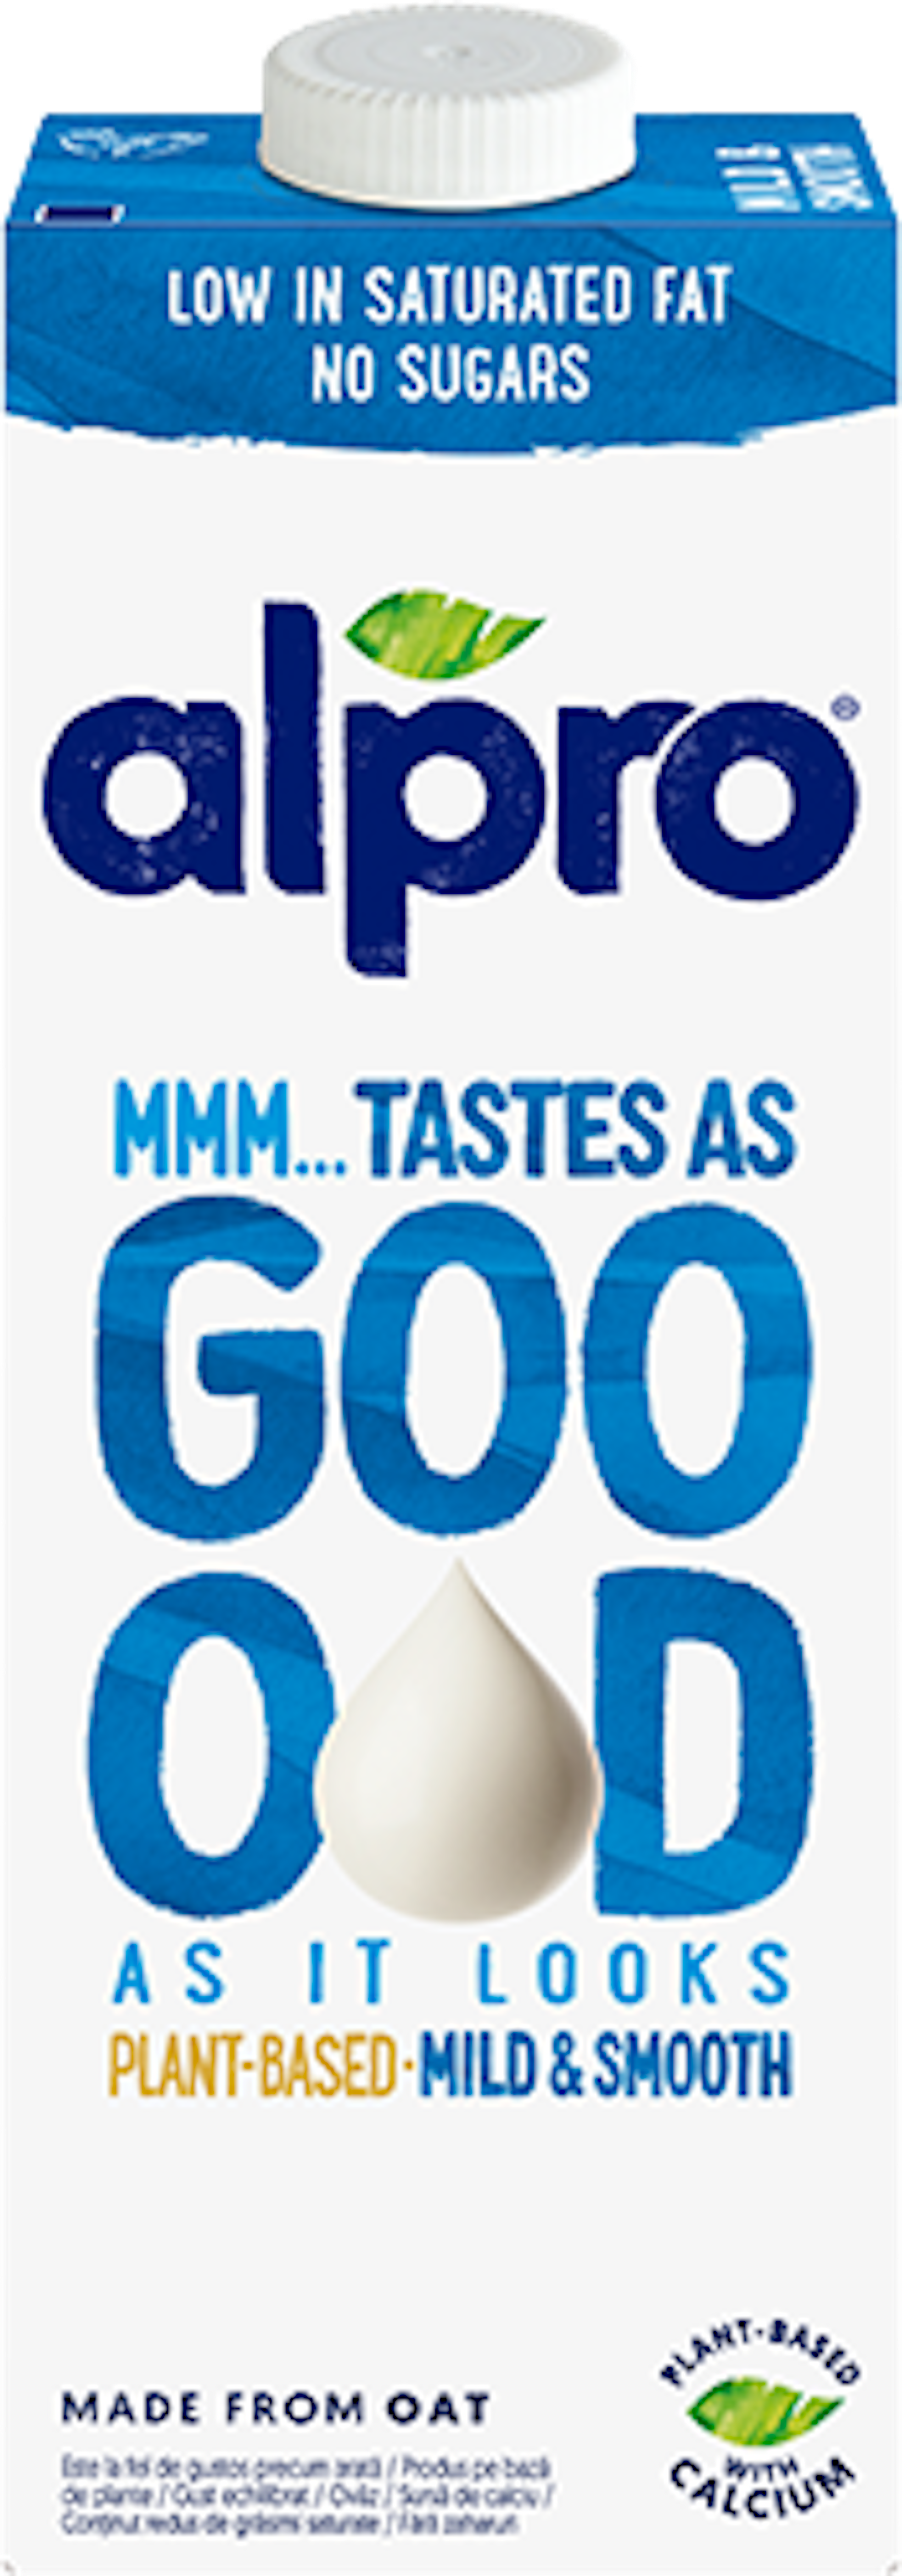 ALPRO ovesný nápoj TASTES AS GOOD – Mild & Smooth 1,8%